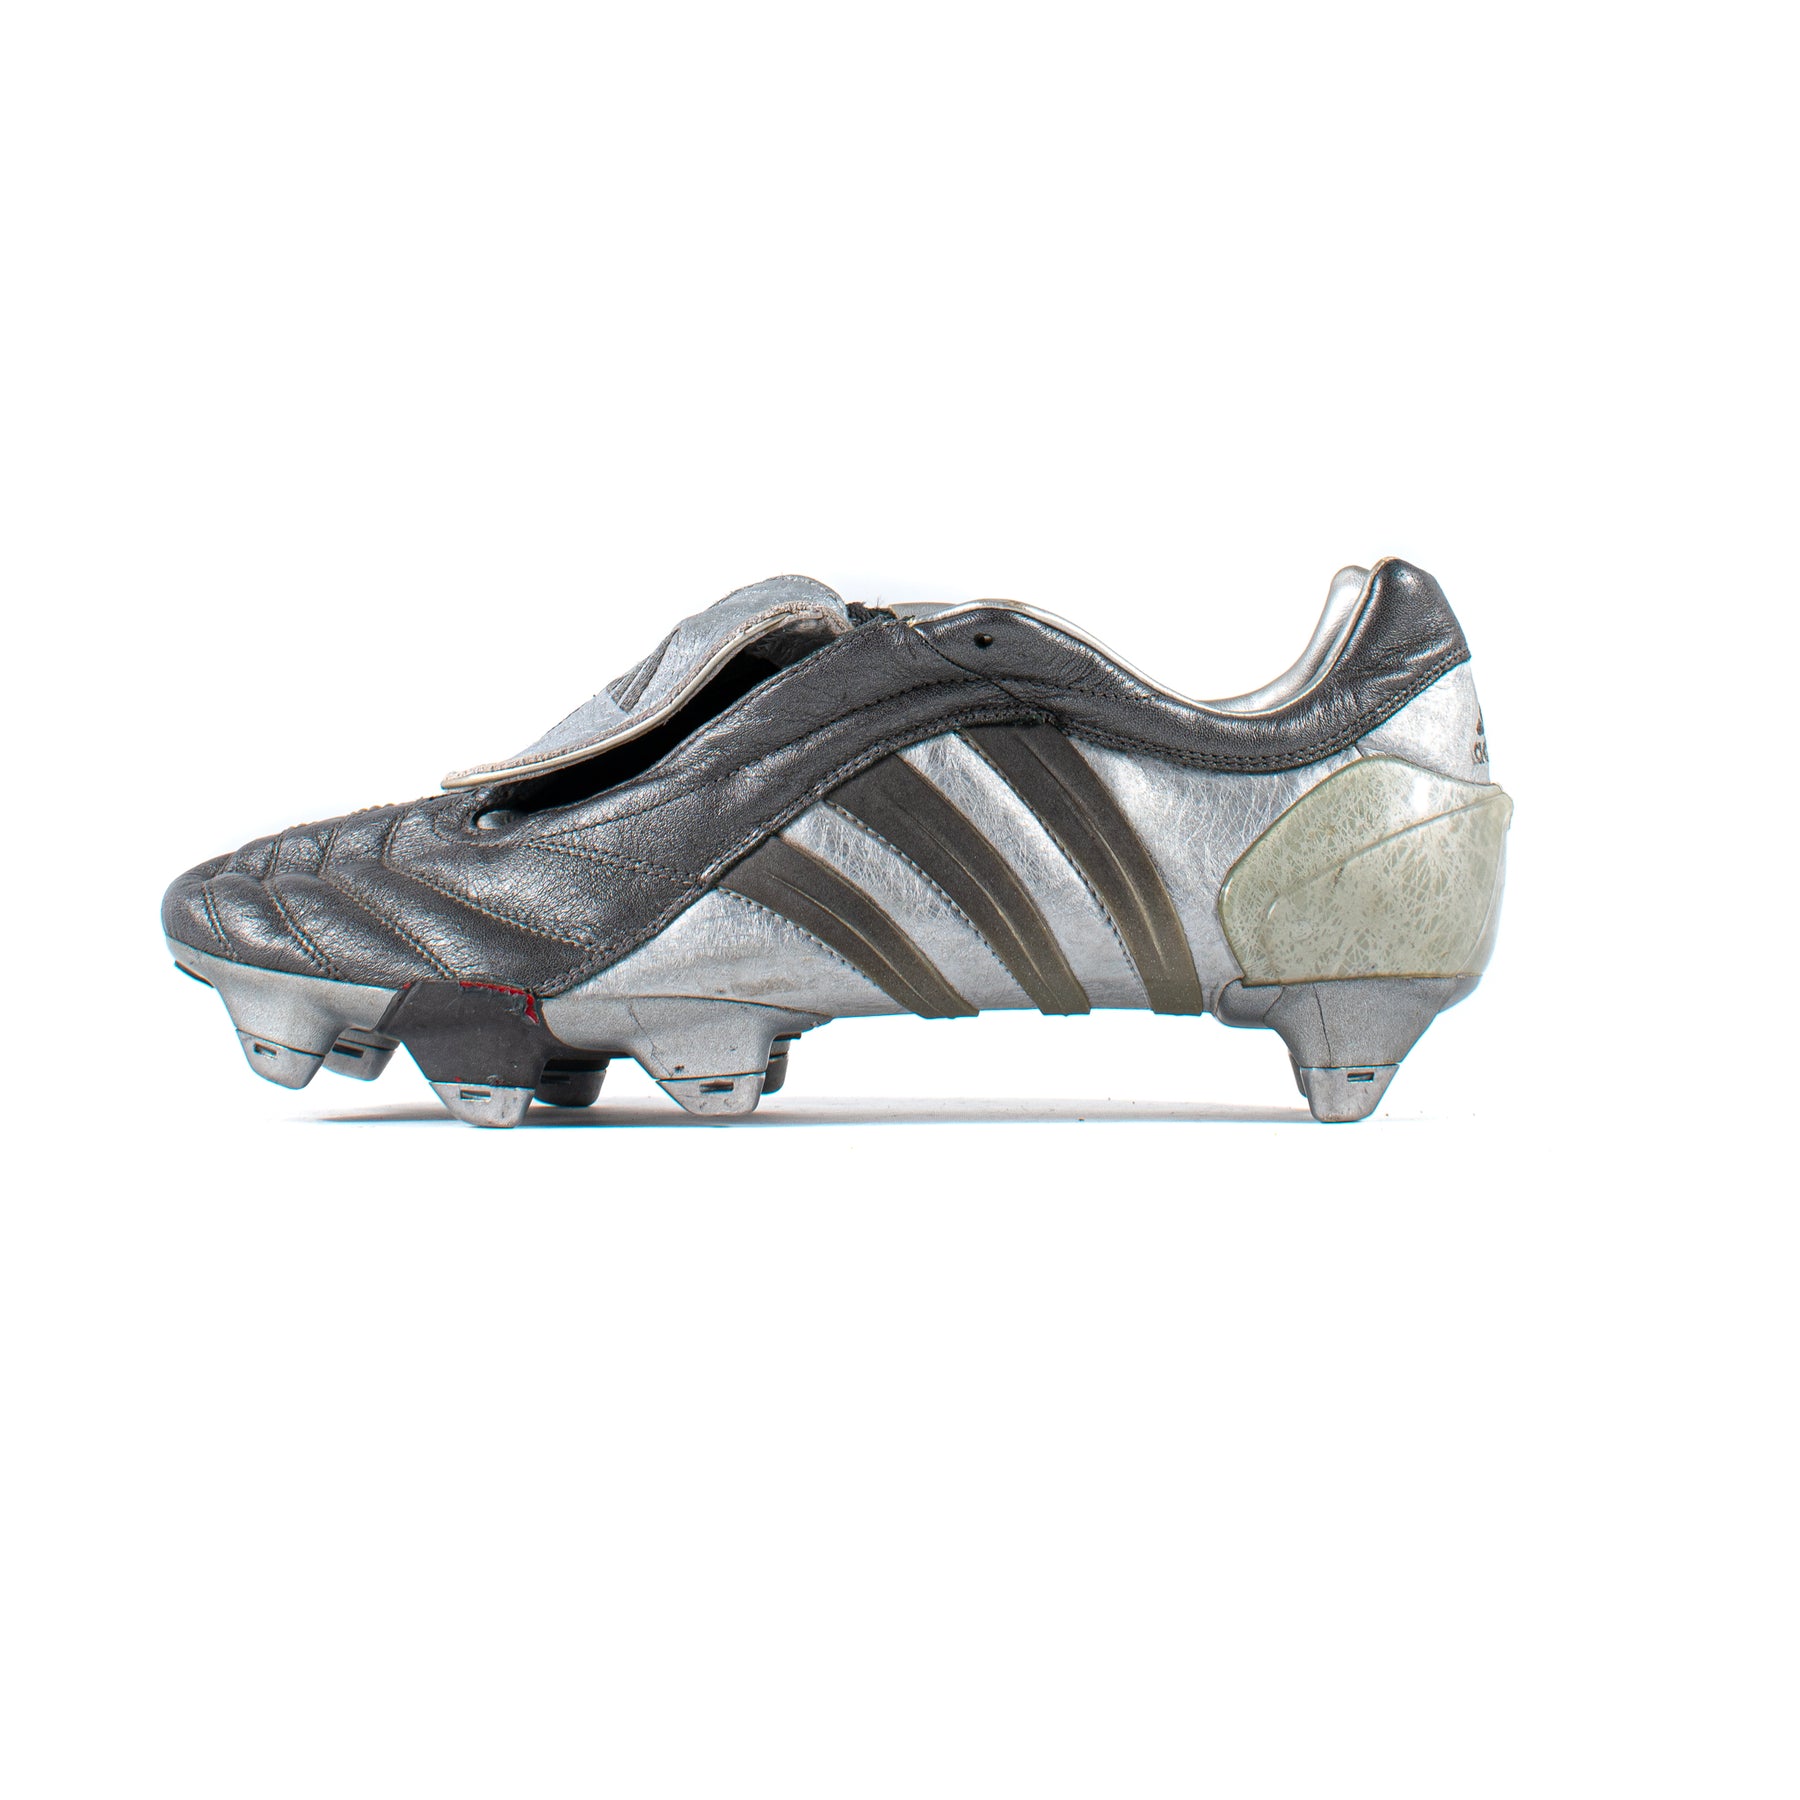 Adidas Predator Pulse Gunmetal Sample *Single* SG – Classic Soccer Cleats